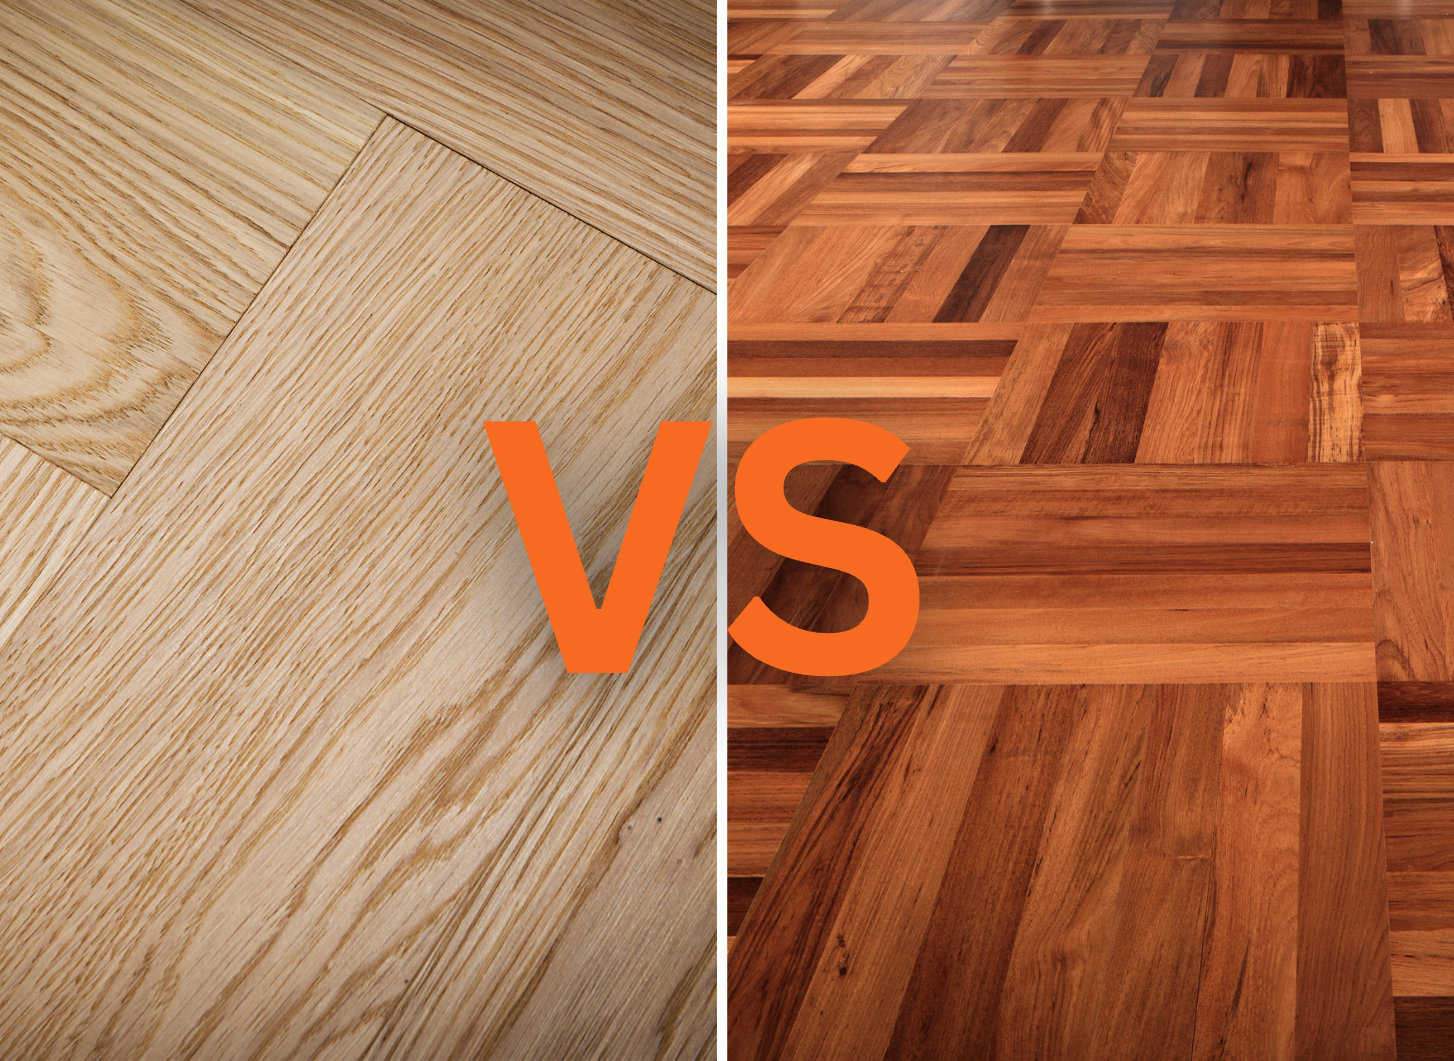 Oak vs Hardwood flooring, both parquetry.